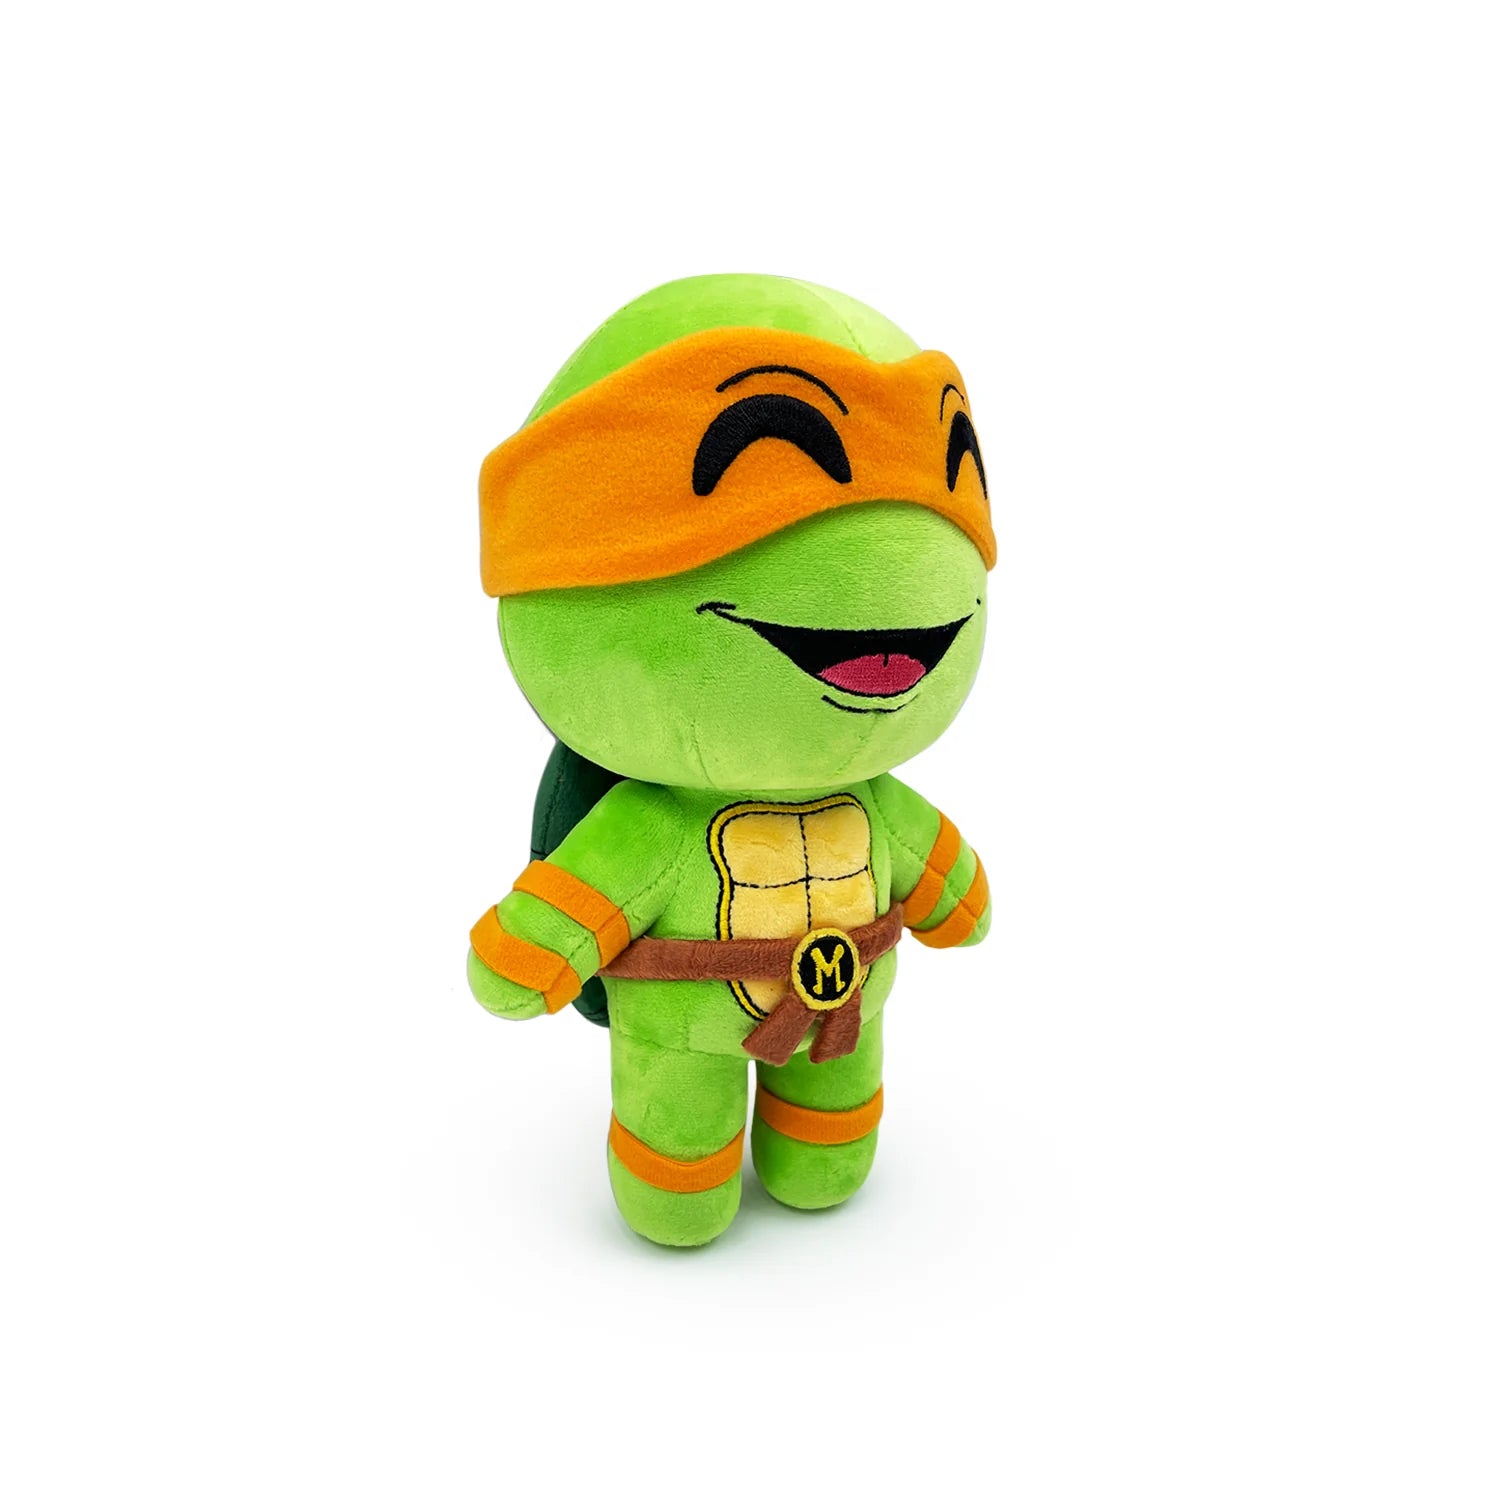 Youtooz Plush: TMNT Tortugas Ninja - Mike Chibi Peluche 9 Pulgadas